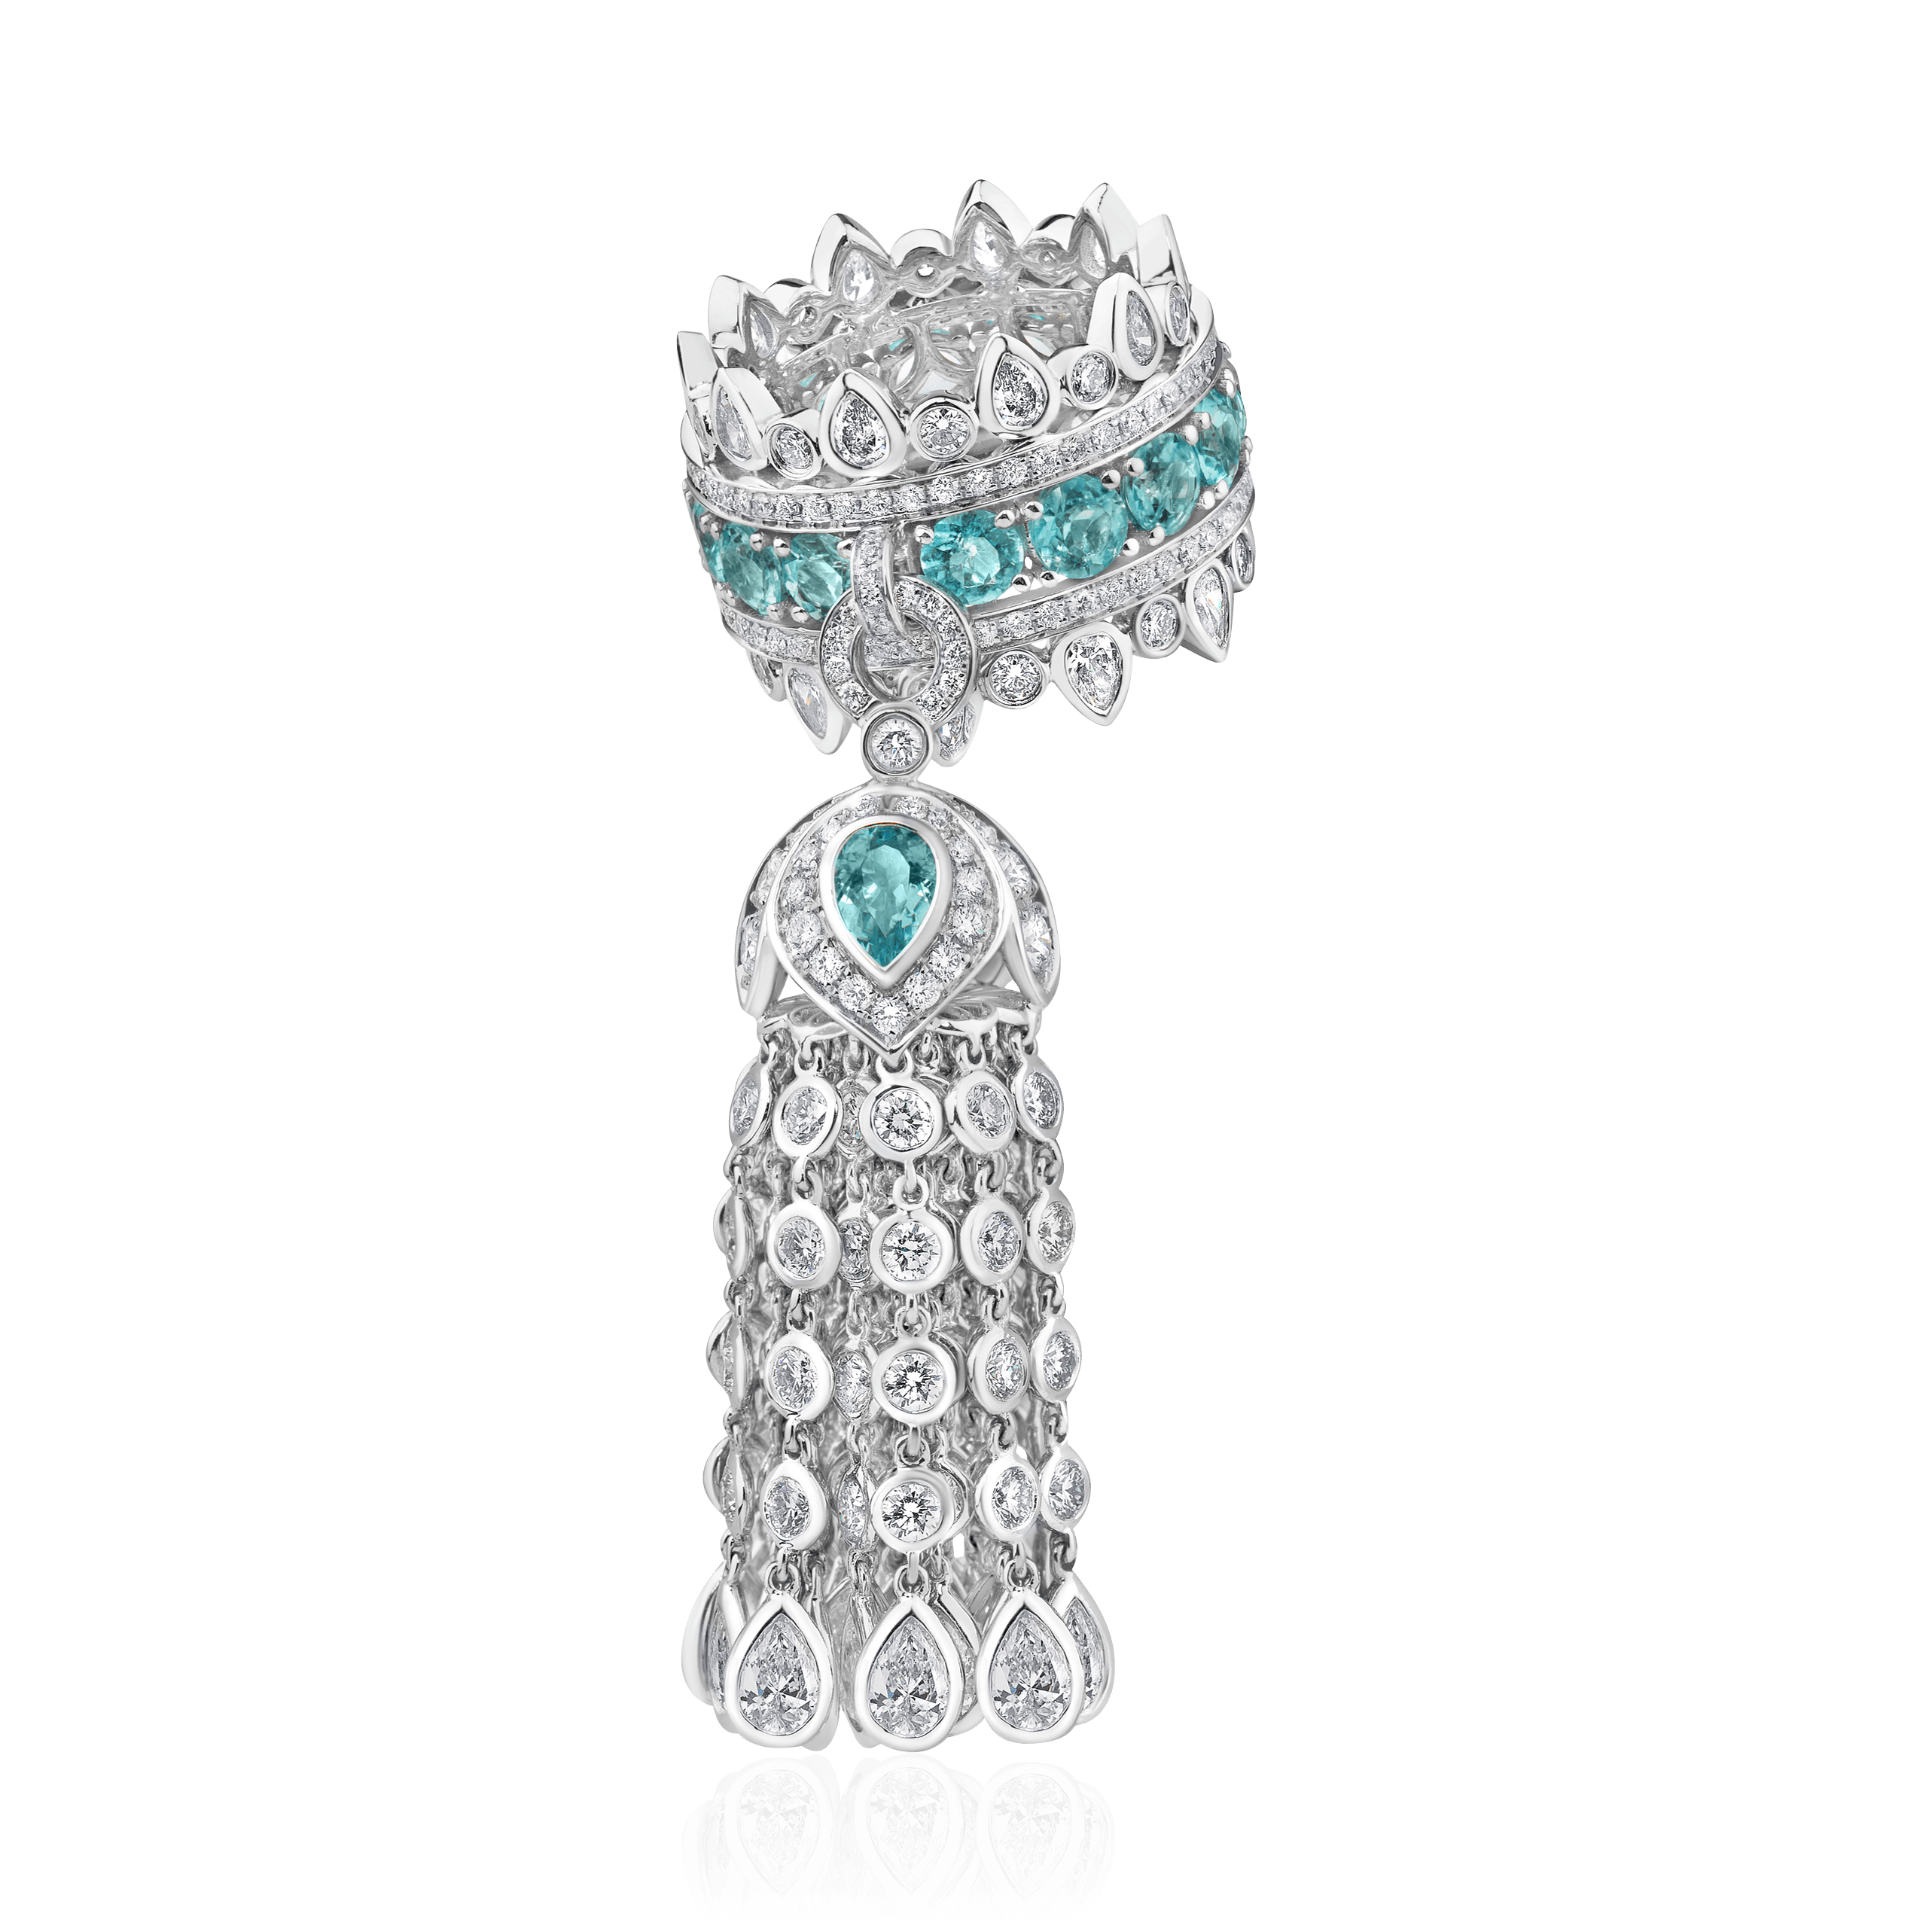 Кольцо с бриллиантами, турмалином Параиба из белого золота 750 пробы (арт. 103918)